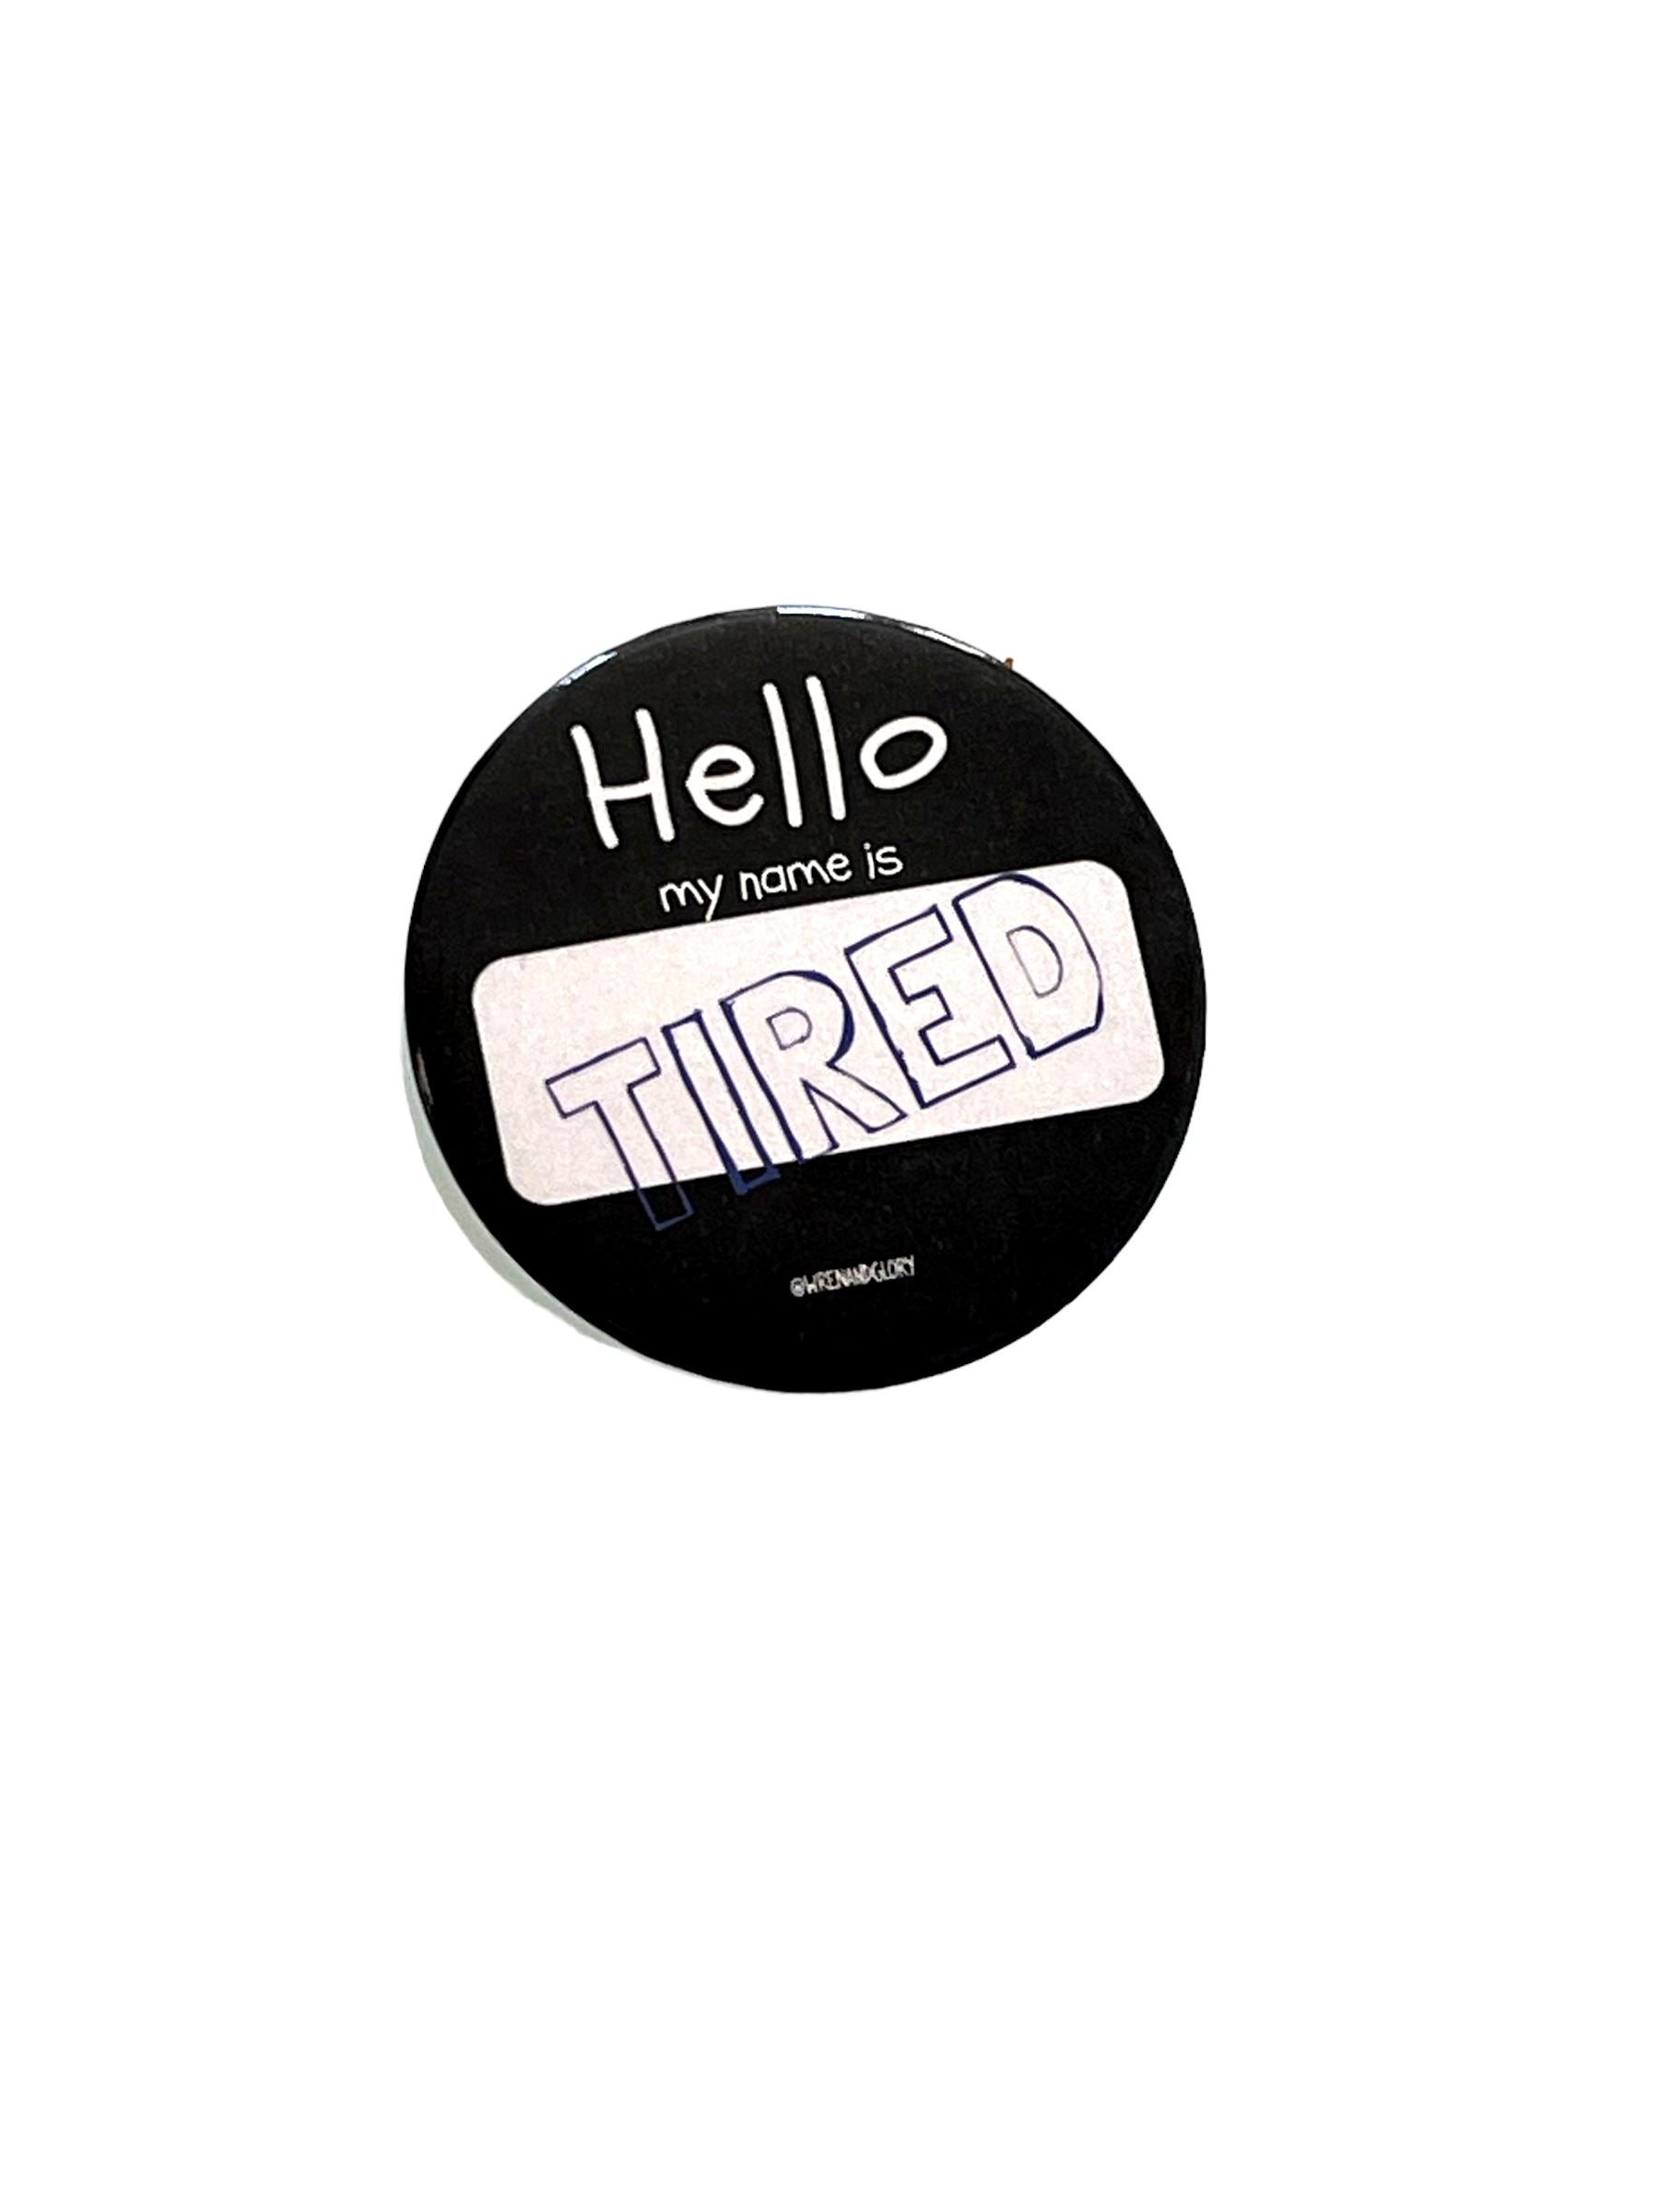 'Tired' Pin